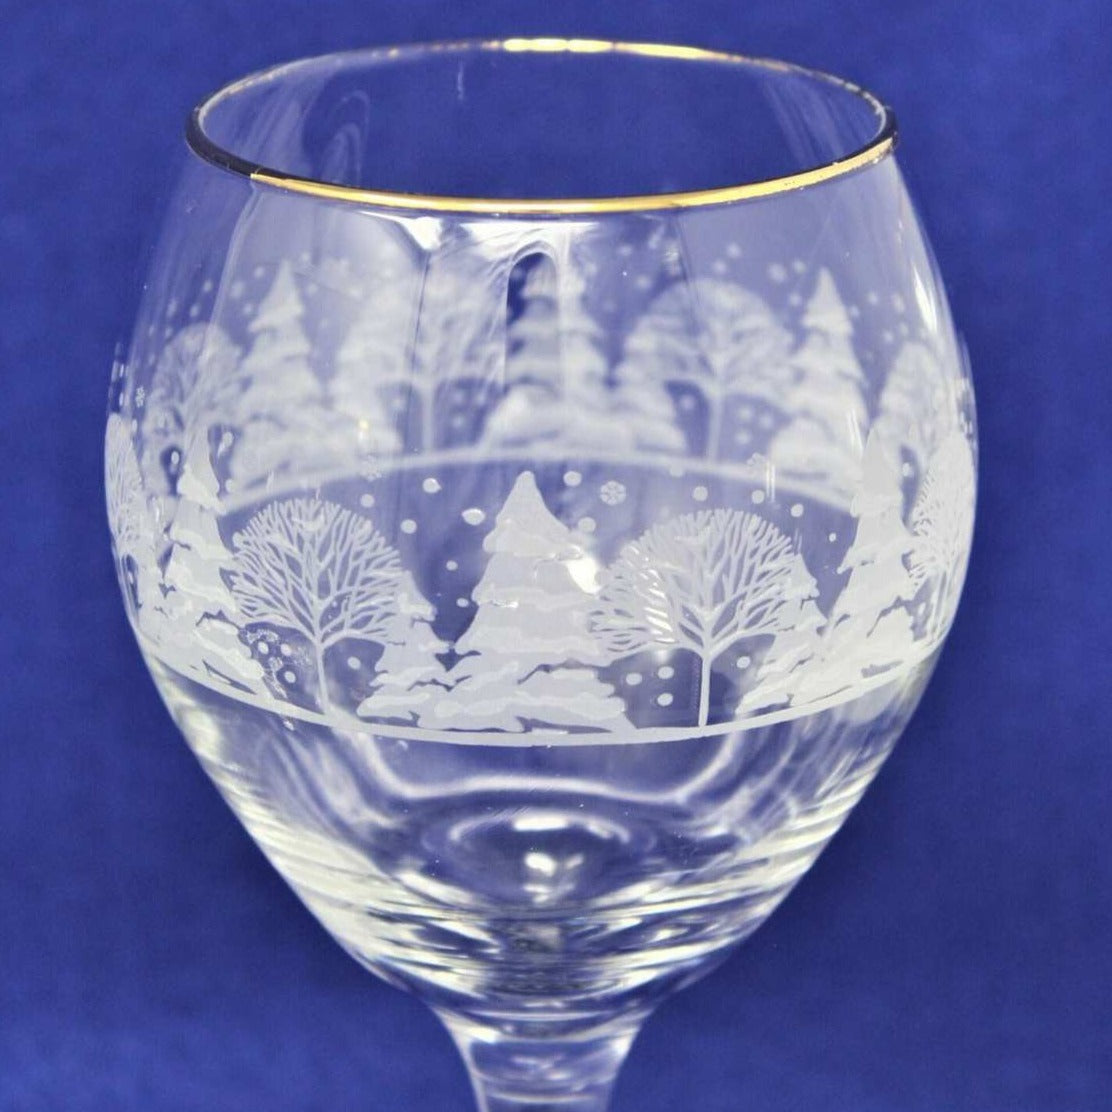 Vintage Libbey Winter Village Christmas Holiday Wine Glasses / Set of 2 /  Winter Village by Libbey / 2 Wine Goblets / Water Goblets 